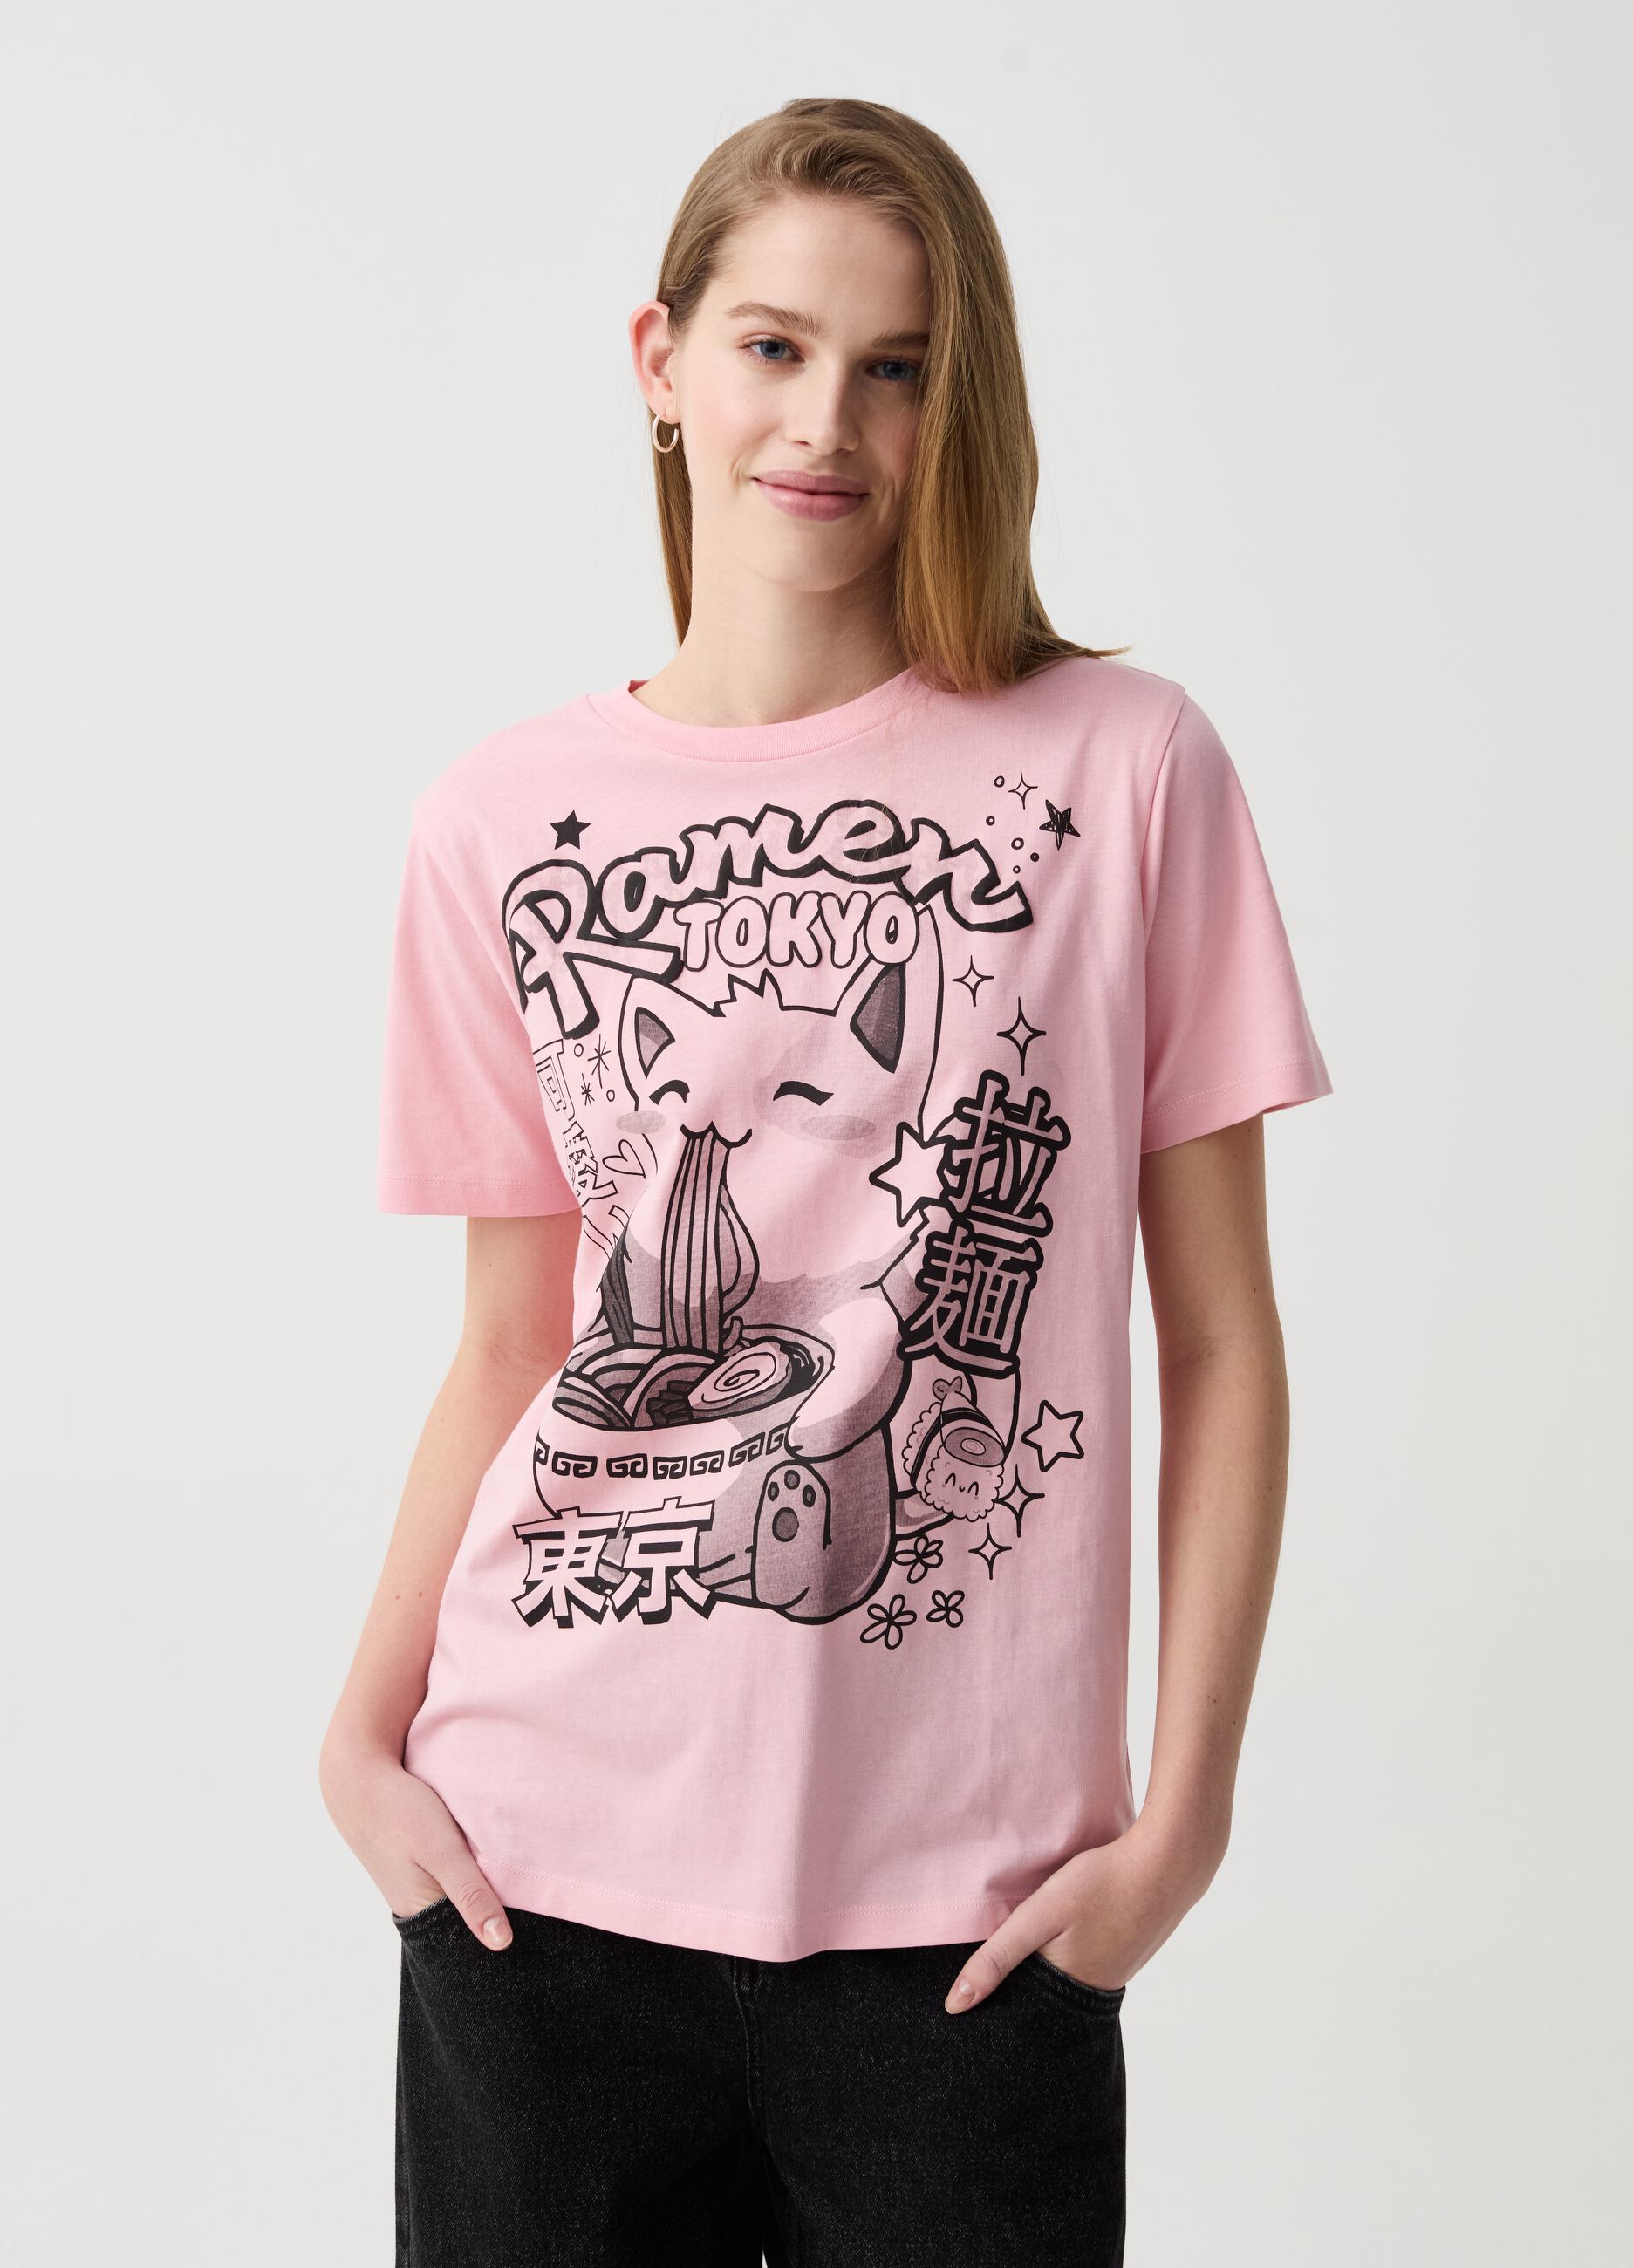 T-shirt with ramen and Japanese kitten print